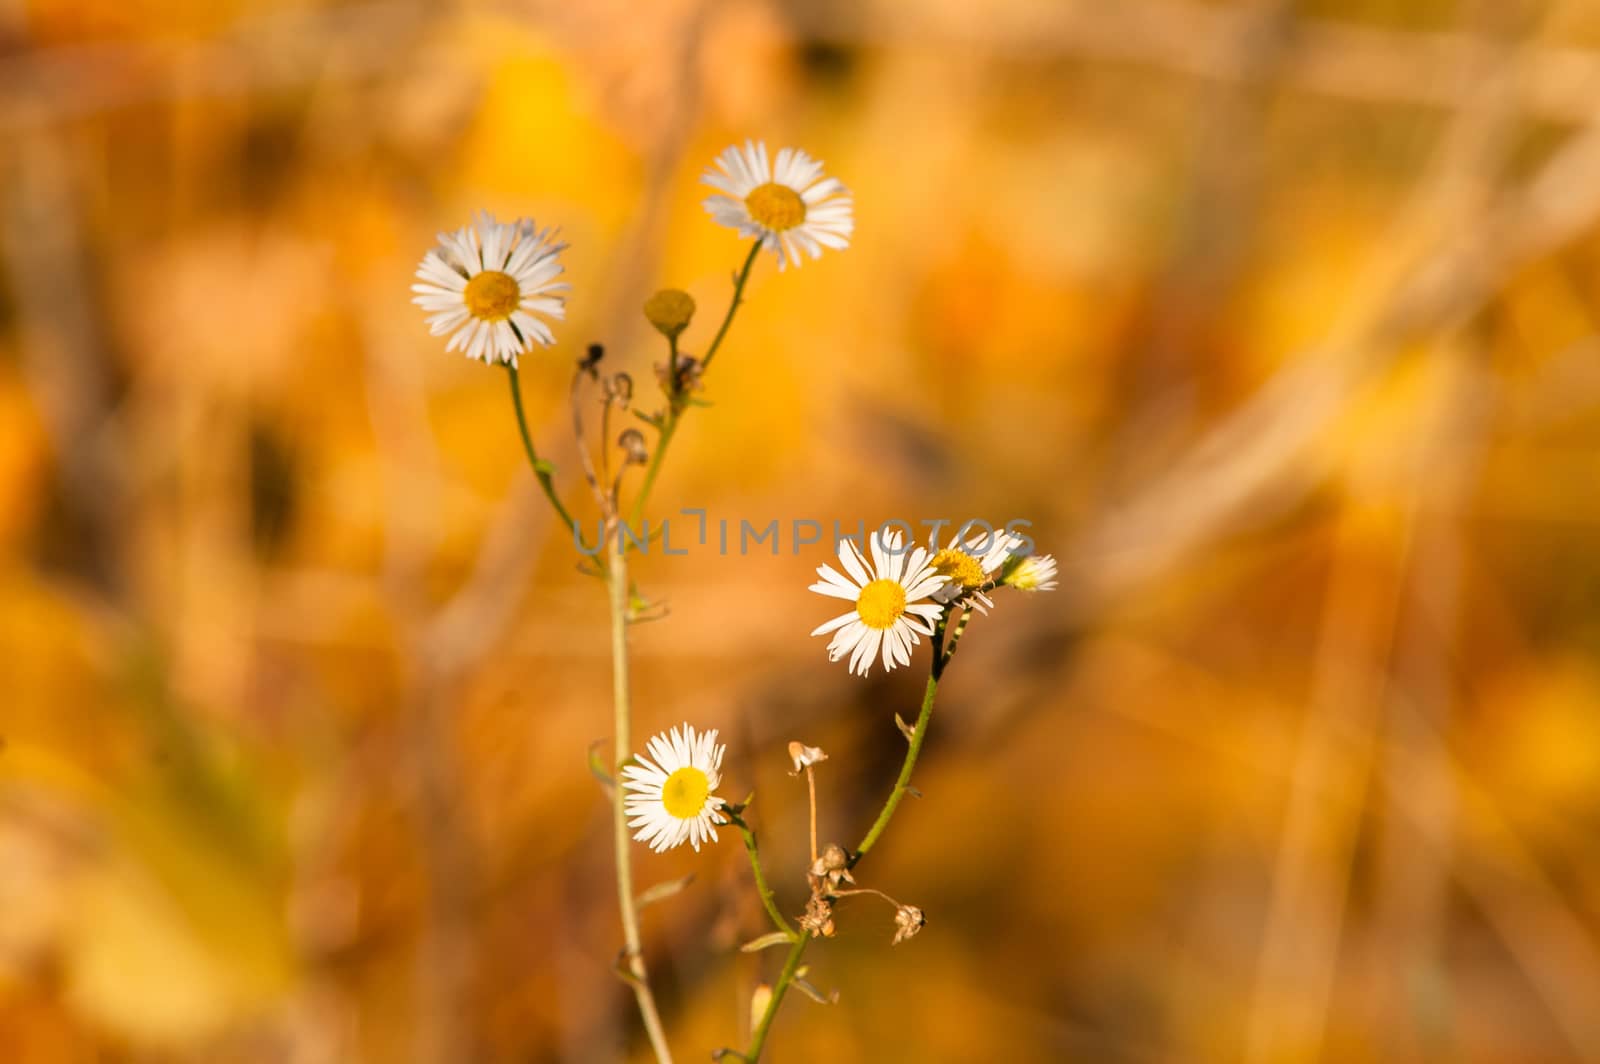 white daisy daisy yellow background by antonius_